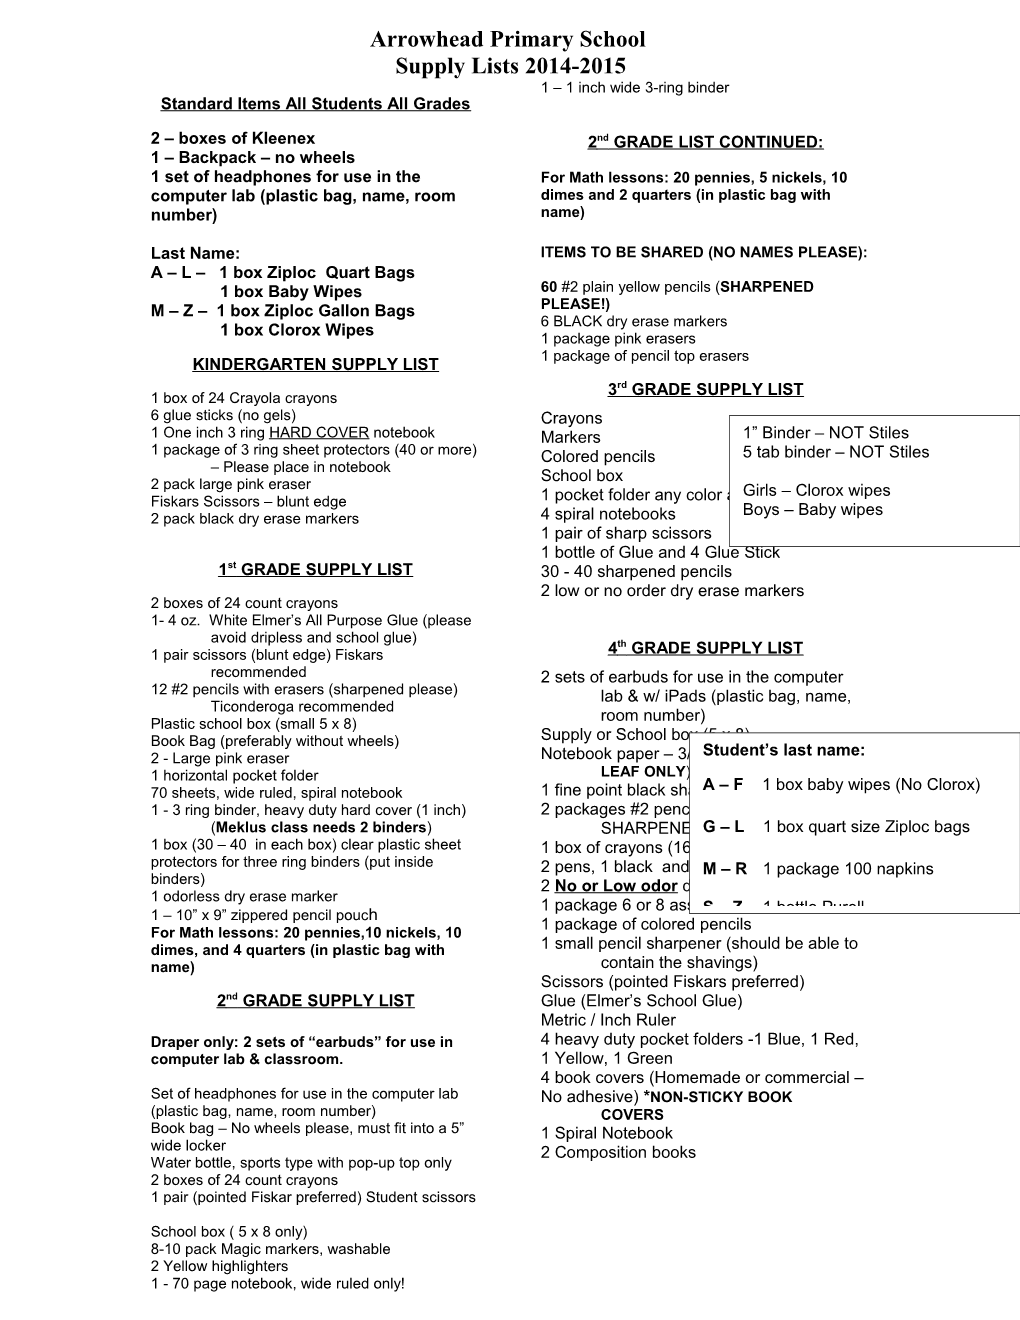 Arrowhead Primary School Supply Lists